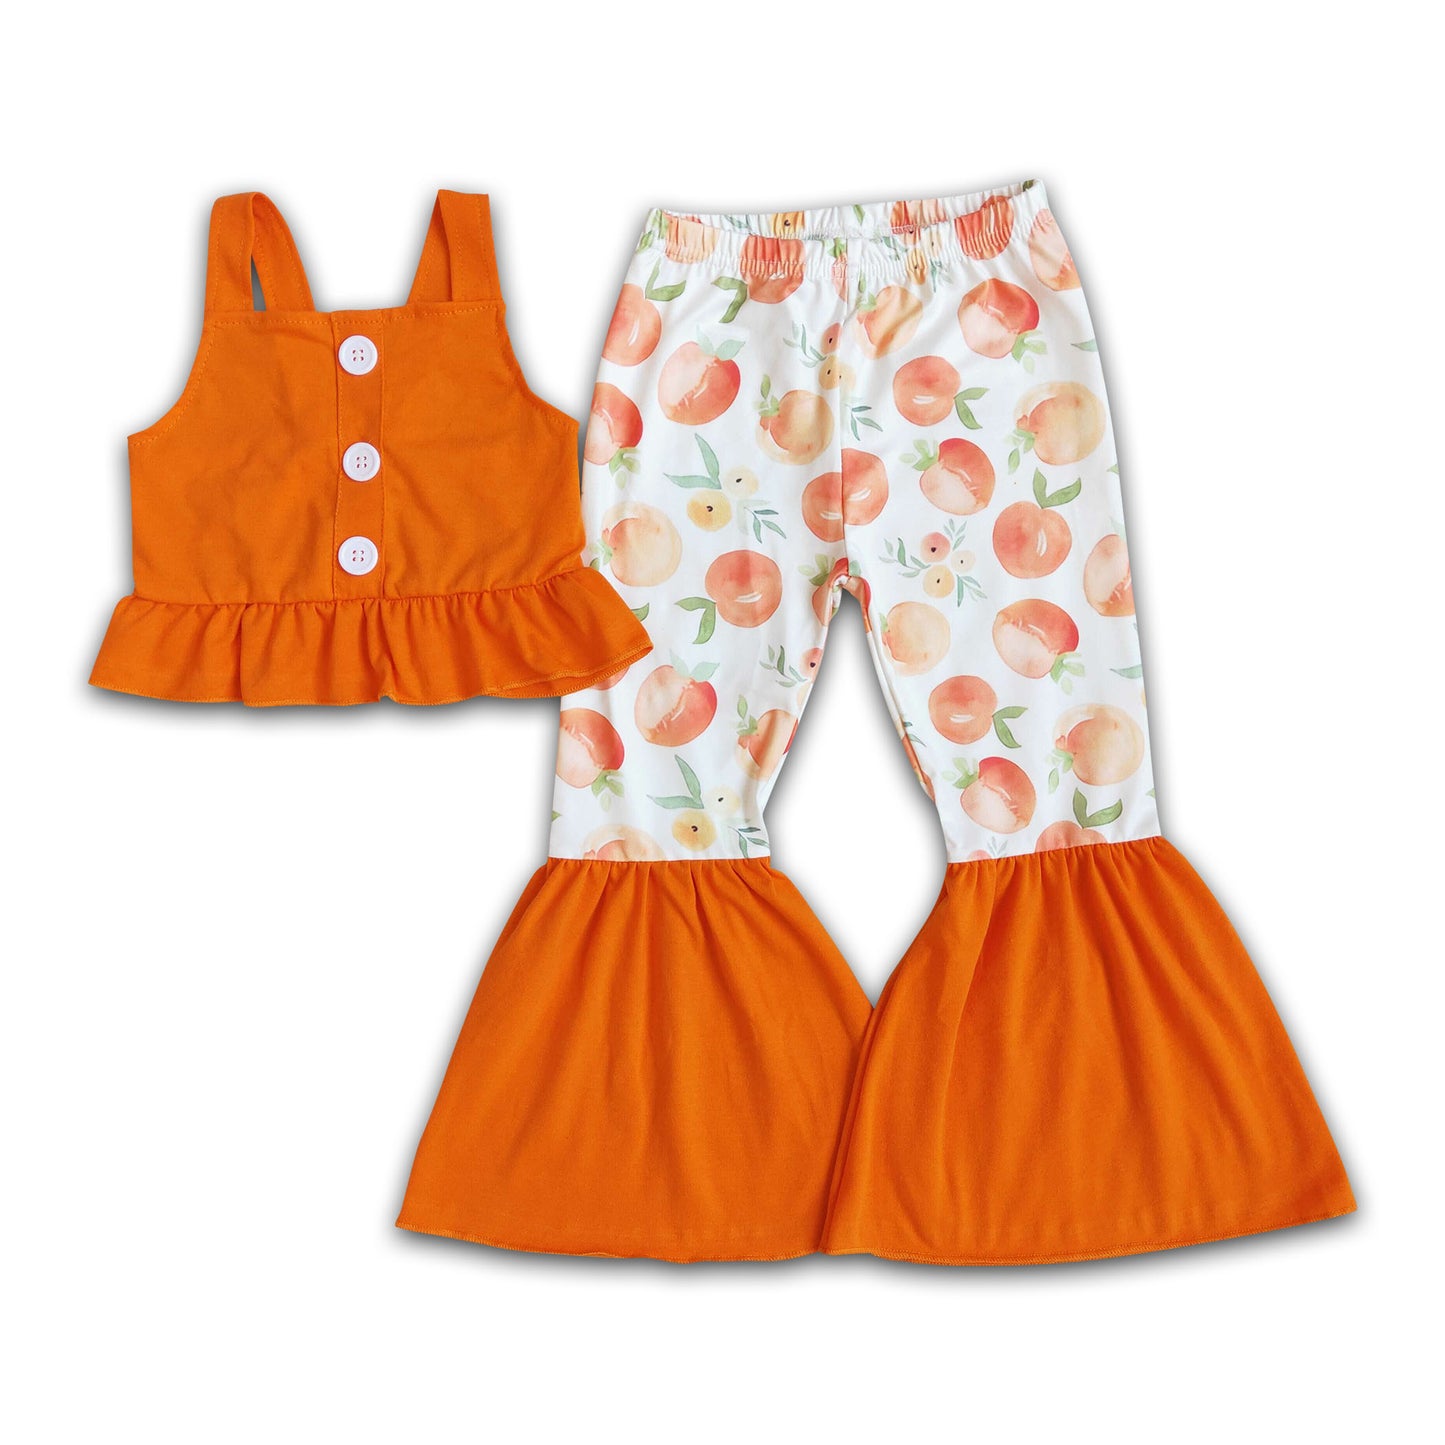 Orange crop top peach pants girls boutique clothing set